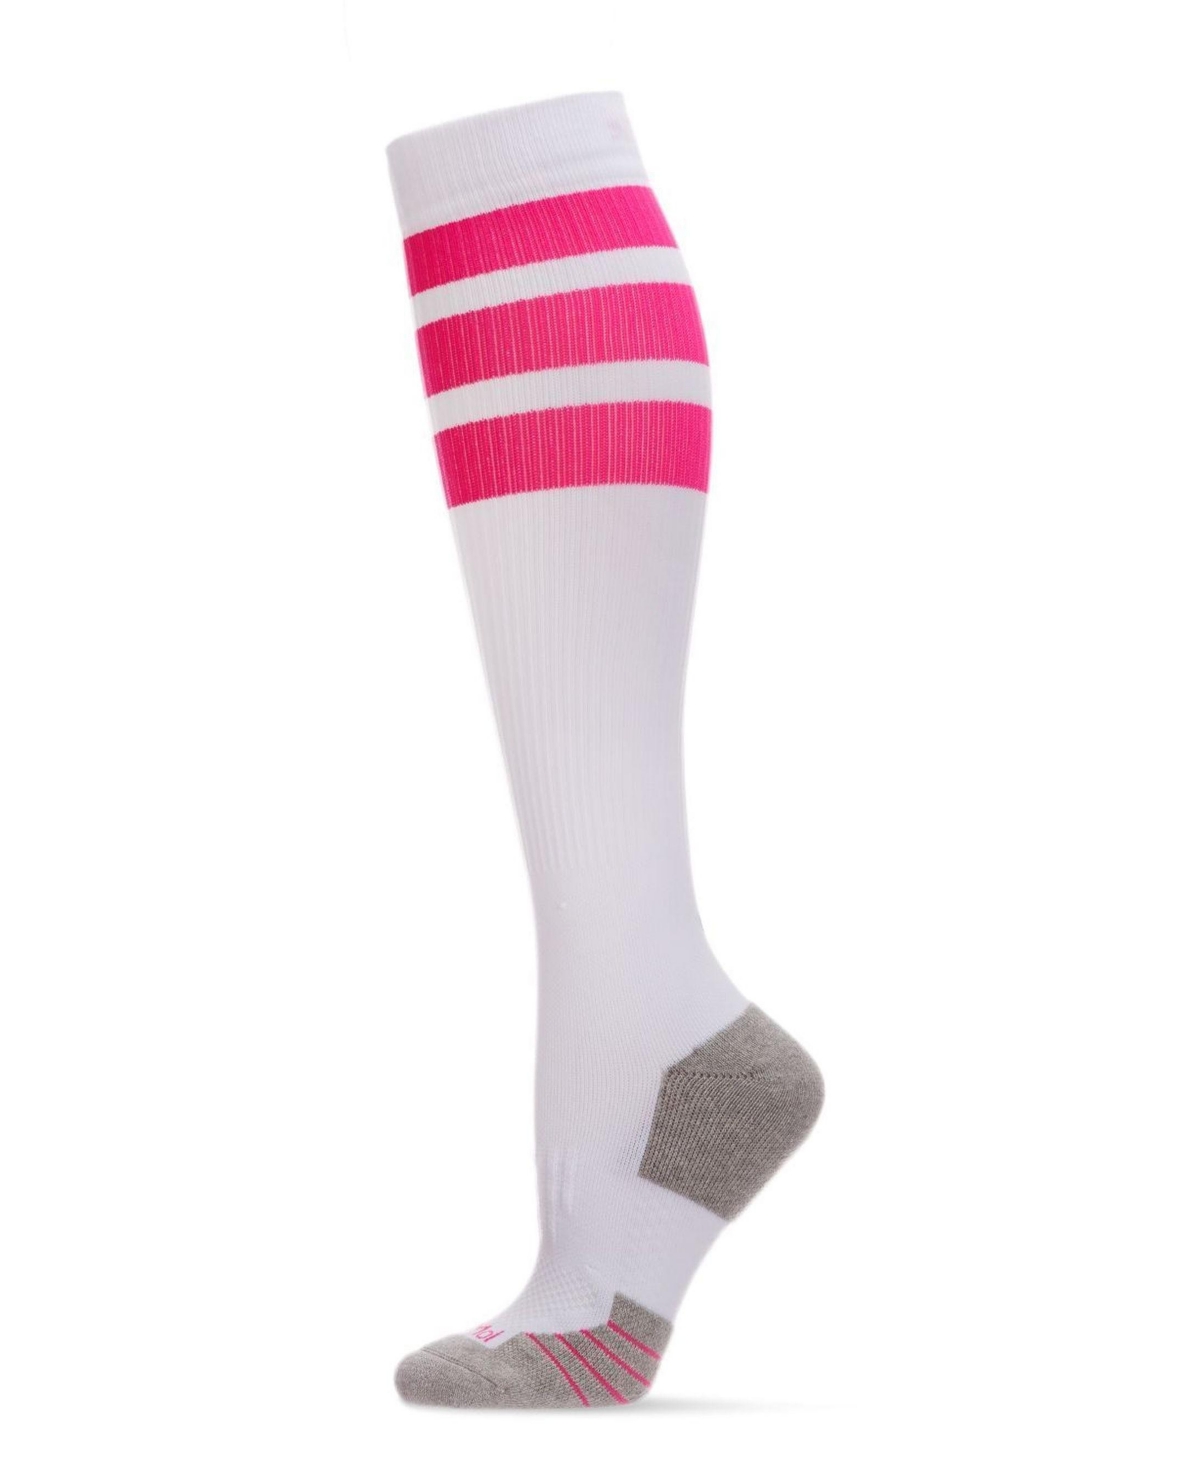 Women's Retro Compression Knee High Socks - Pink